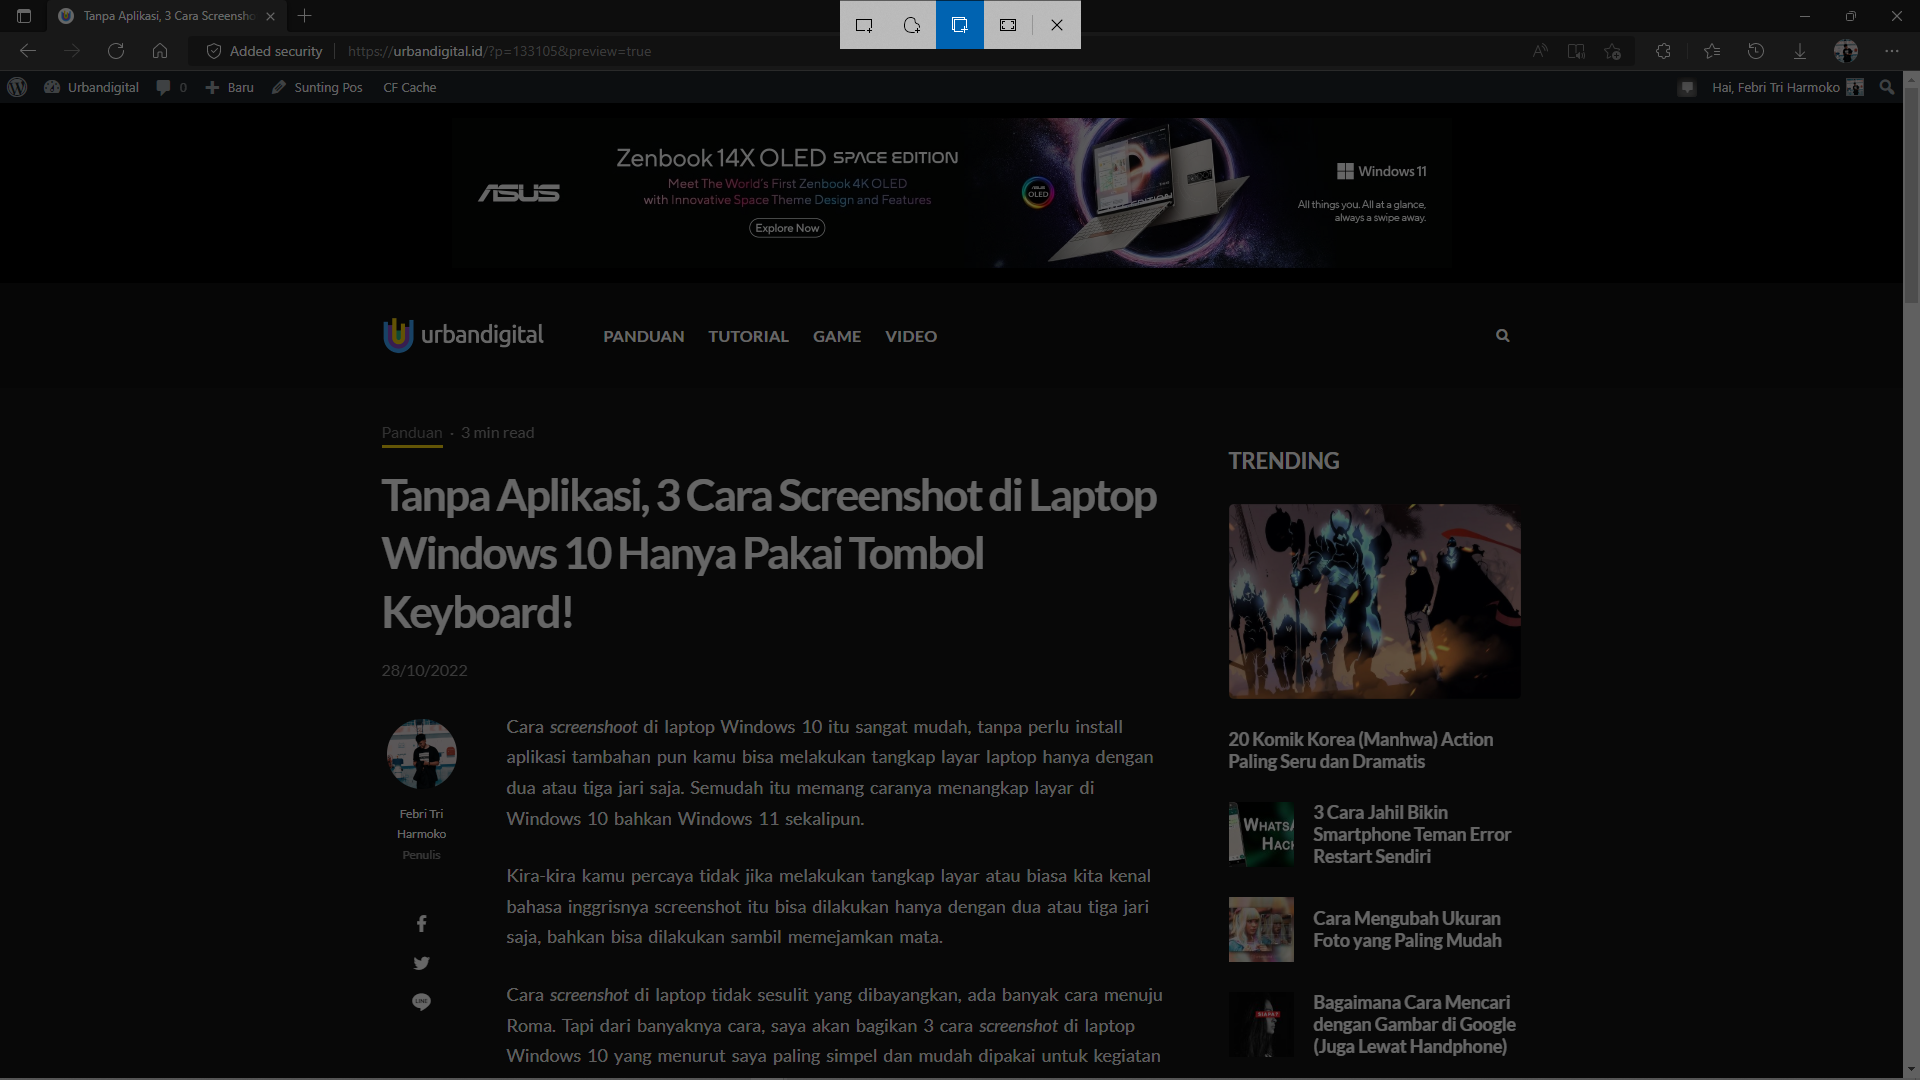 Tanpa Aplikasi, 3 Cara Screenshot di Laptop Windows 10 Hanya Pakai Tombol Keyboard